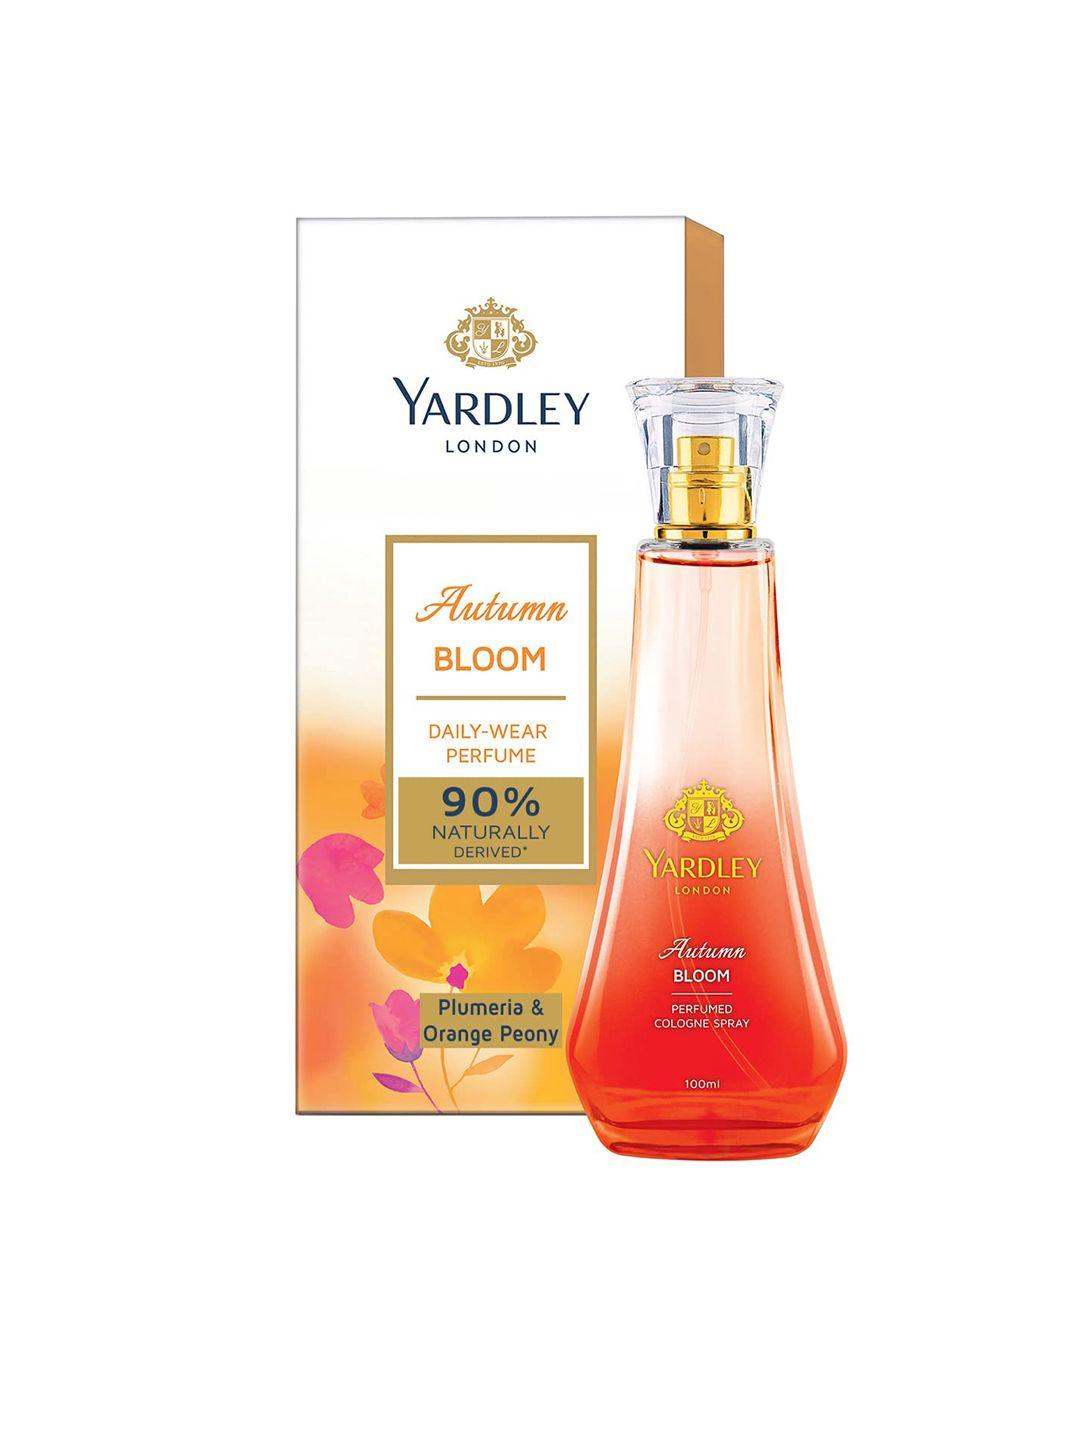 yardley london autumn bloom plumeria & orange peony perfumed cologne spray - 100 ml